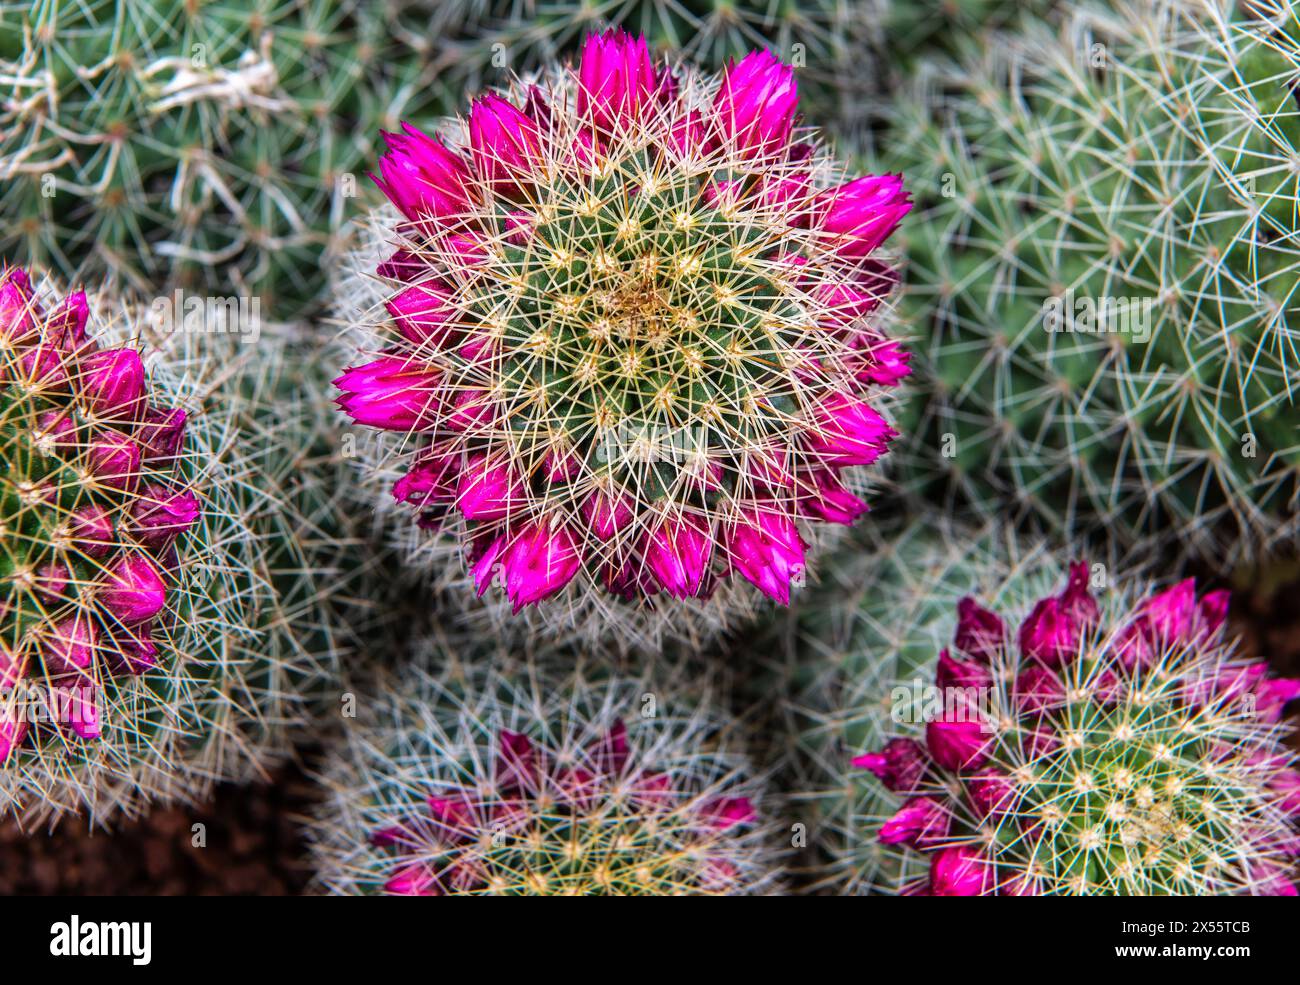 mammillaria spinosissima (spiny pincushion cactus). Succulent plant. Cacteae. Selective focus Stock Photo